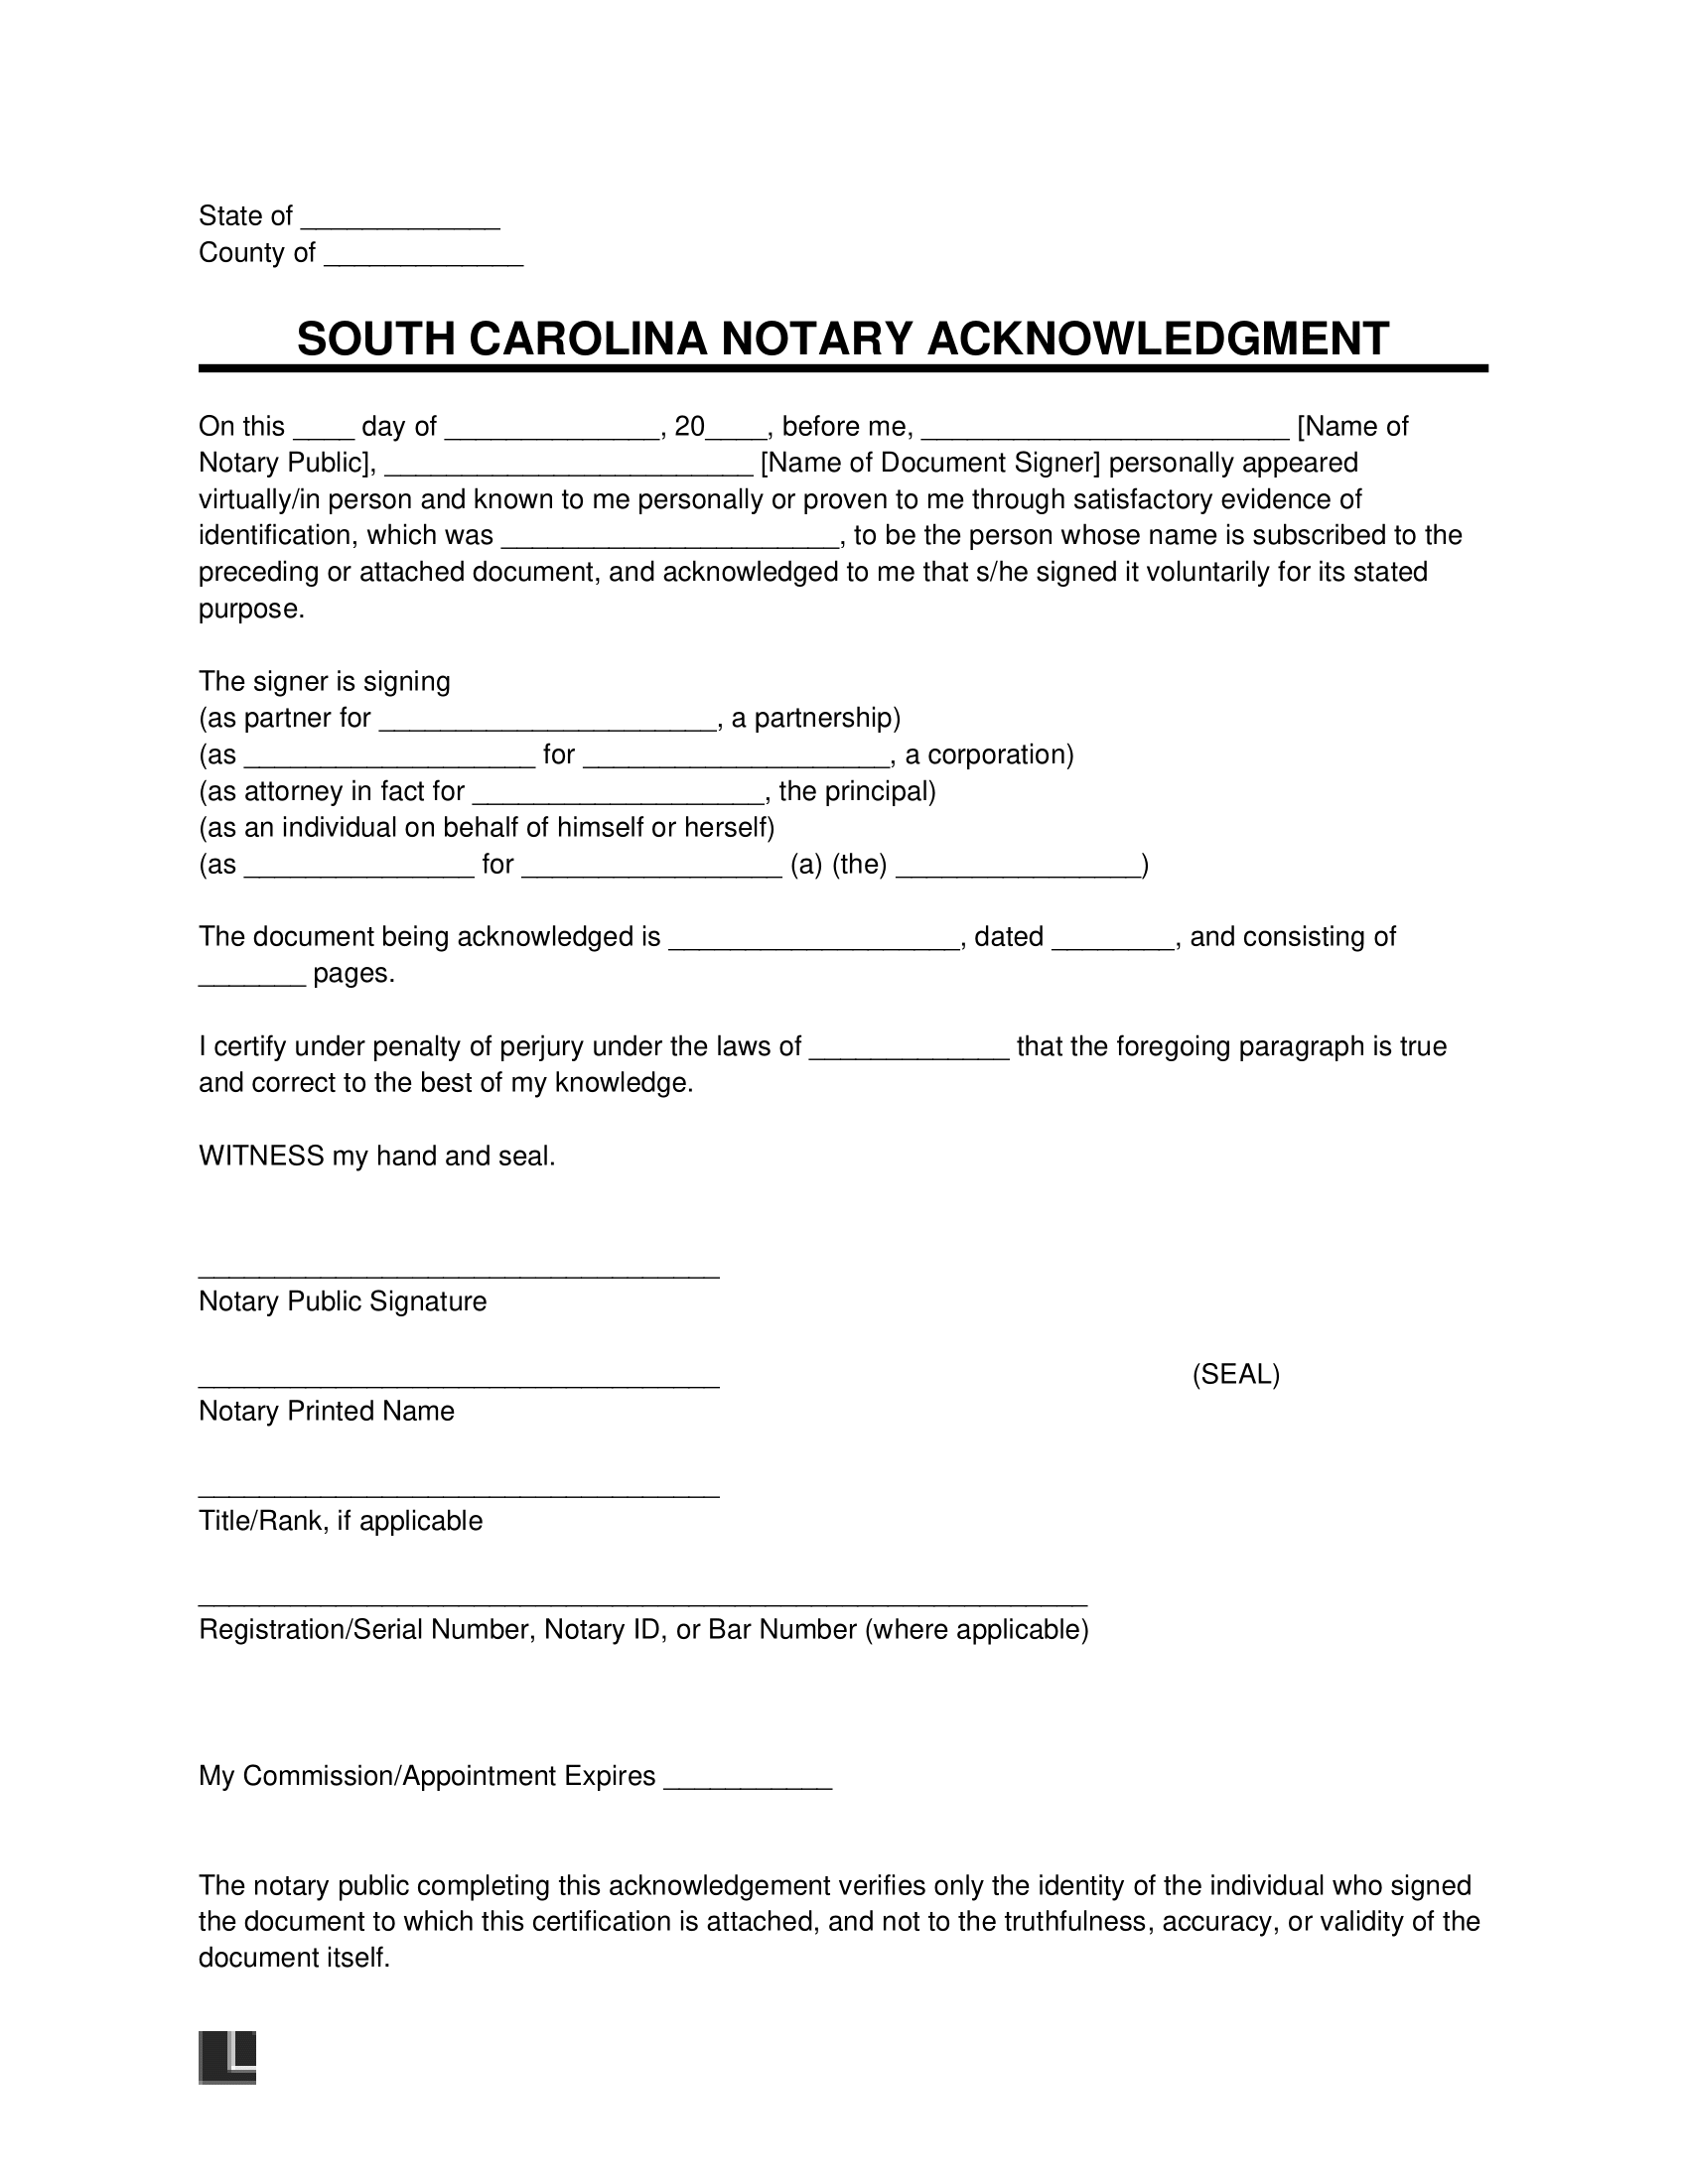 South Carolina Notary Acknowledgment Form